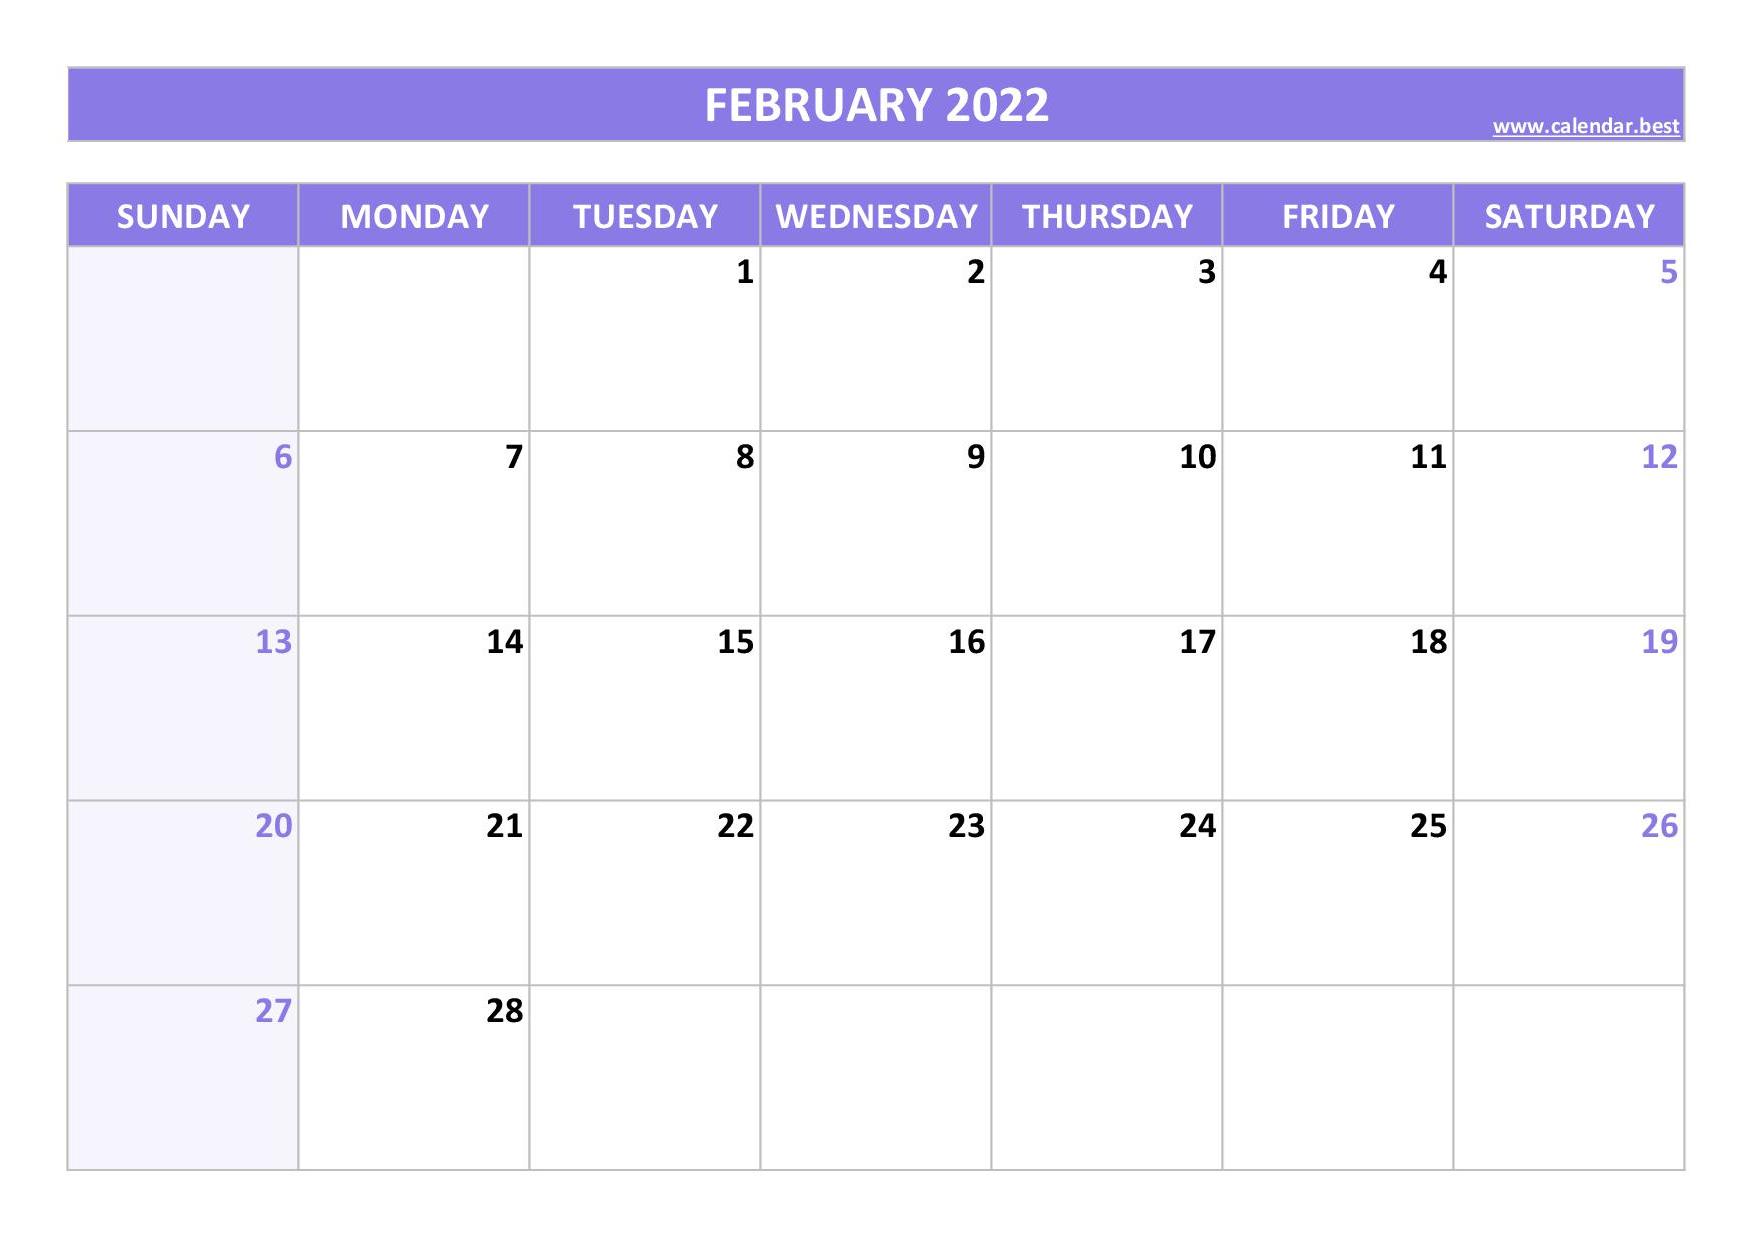 February 2022 Calendar Template February 2022 Calendar -Calendar.best